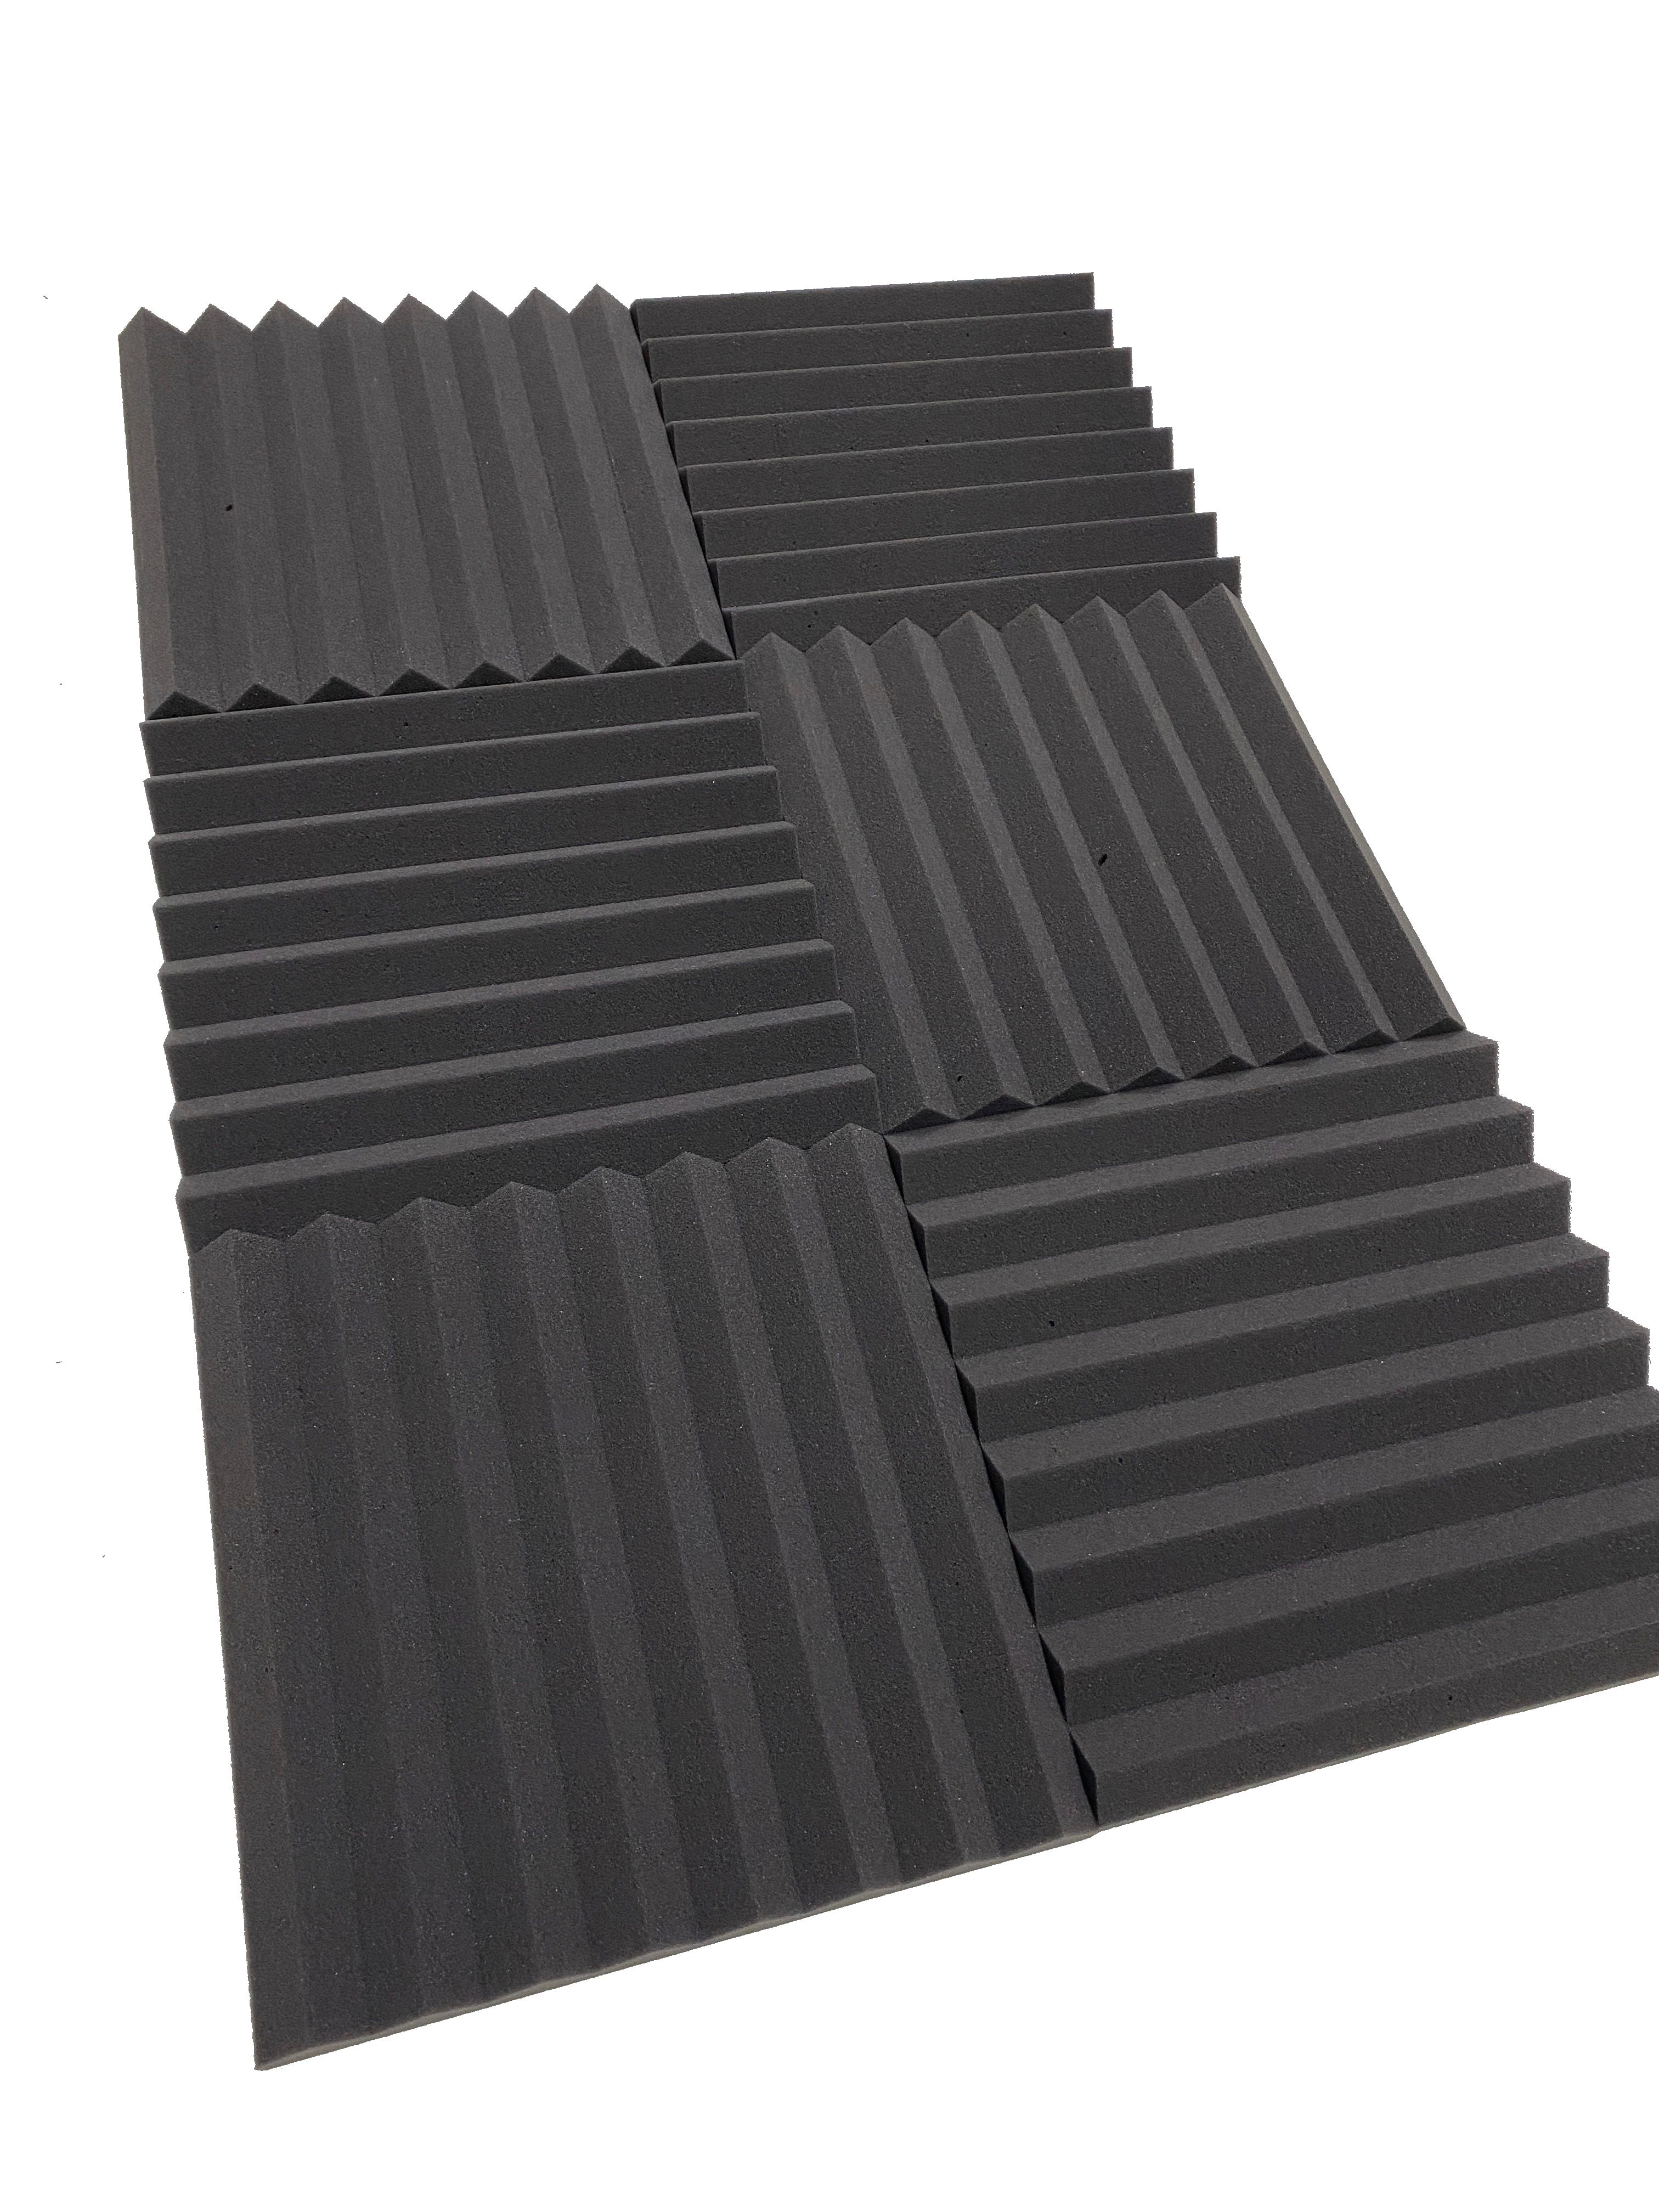 Wedge 12" Acoustic Studio Foam Tile Pack - 24 Tiles, 2.2qm Coverage-13